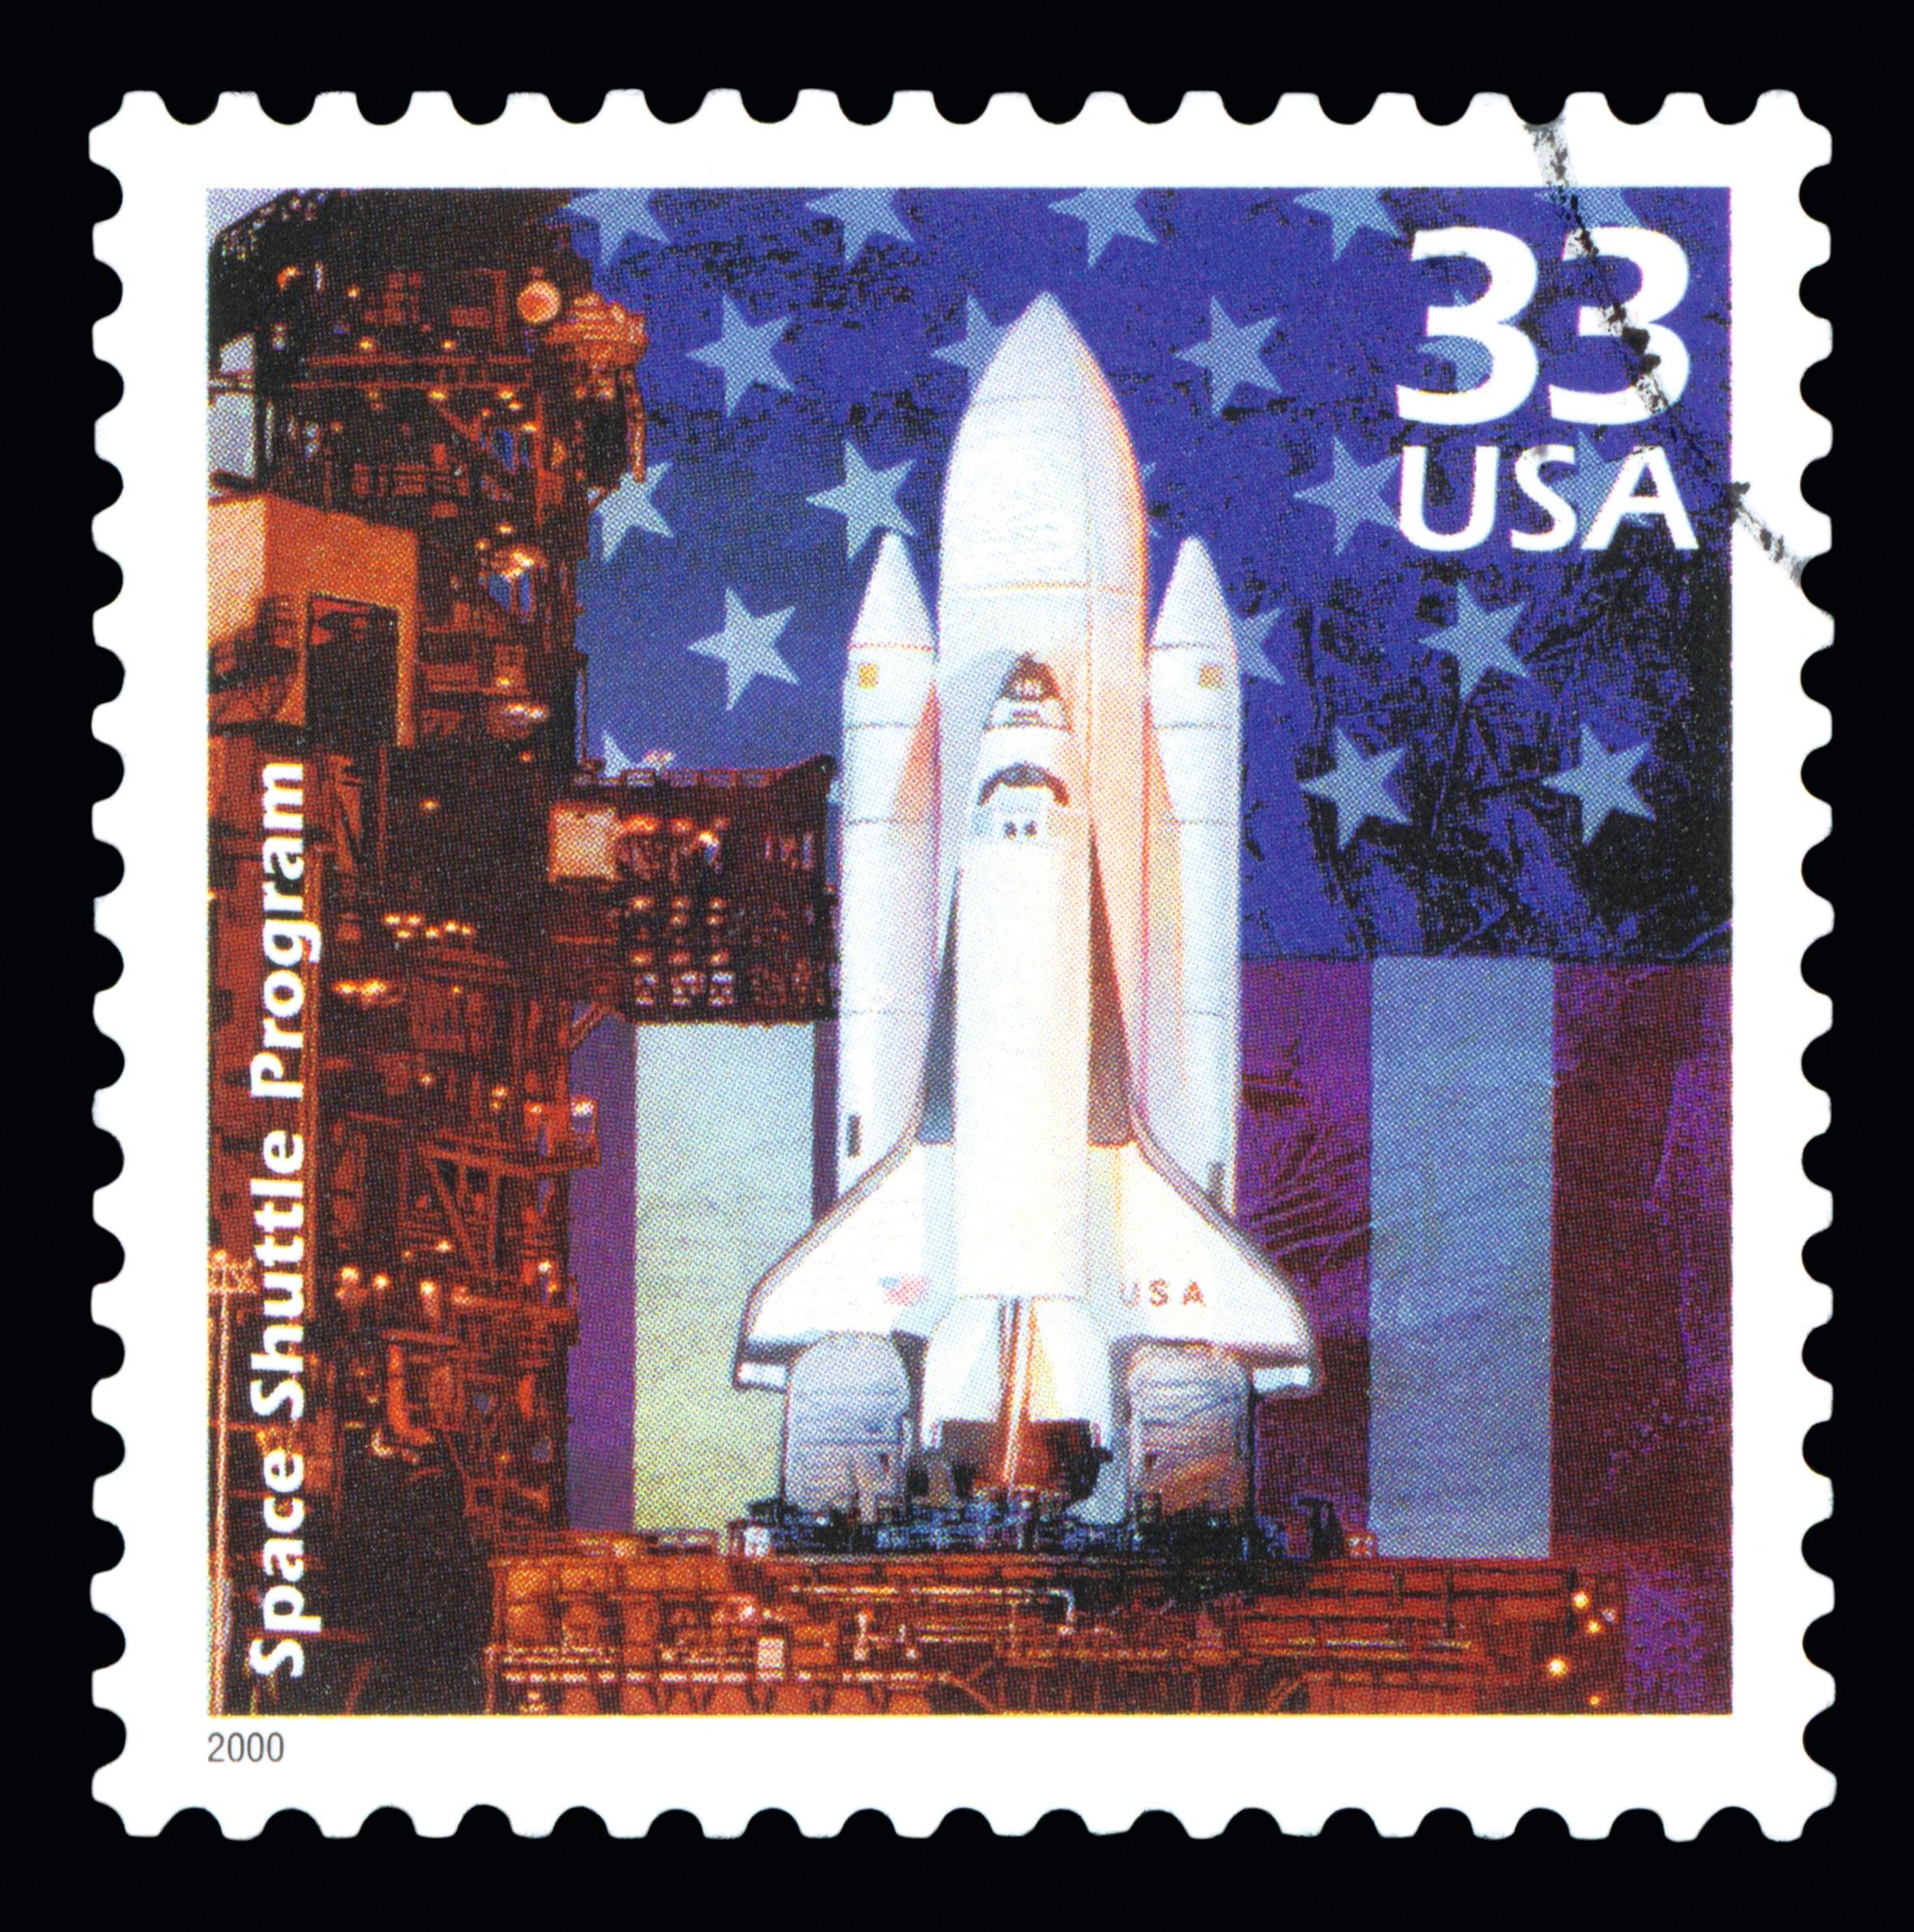 Postage stamp, around 2000.